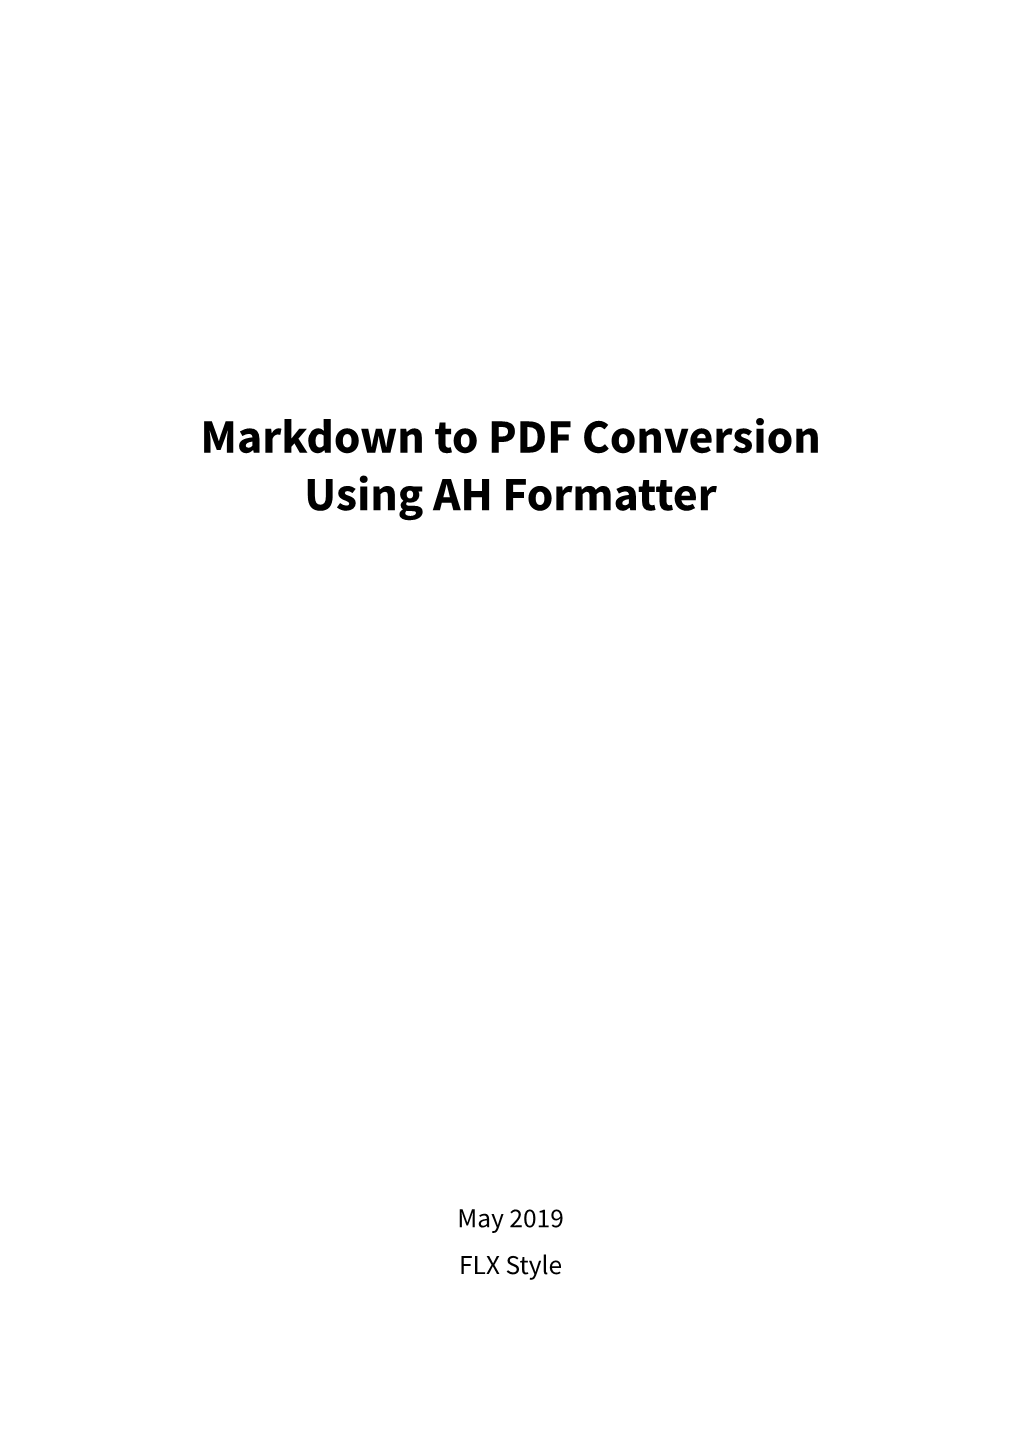 Markdown to PDF Conversion Using AH Formatter